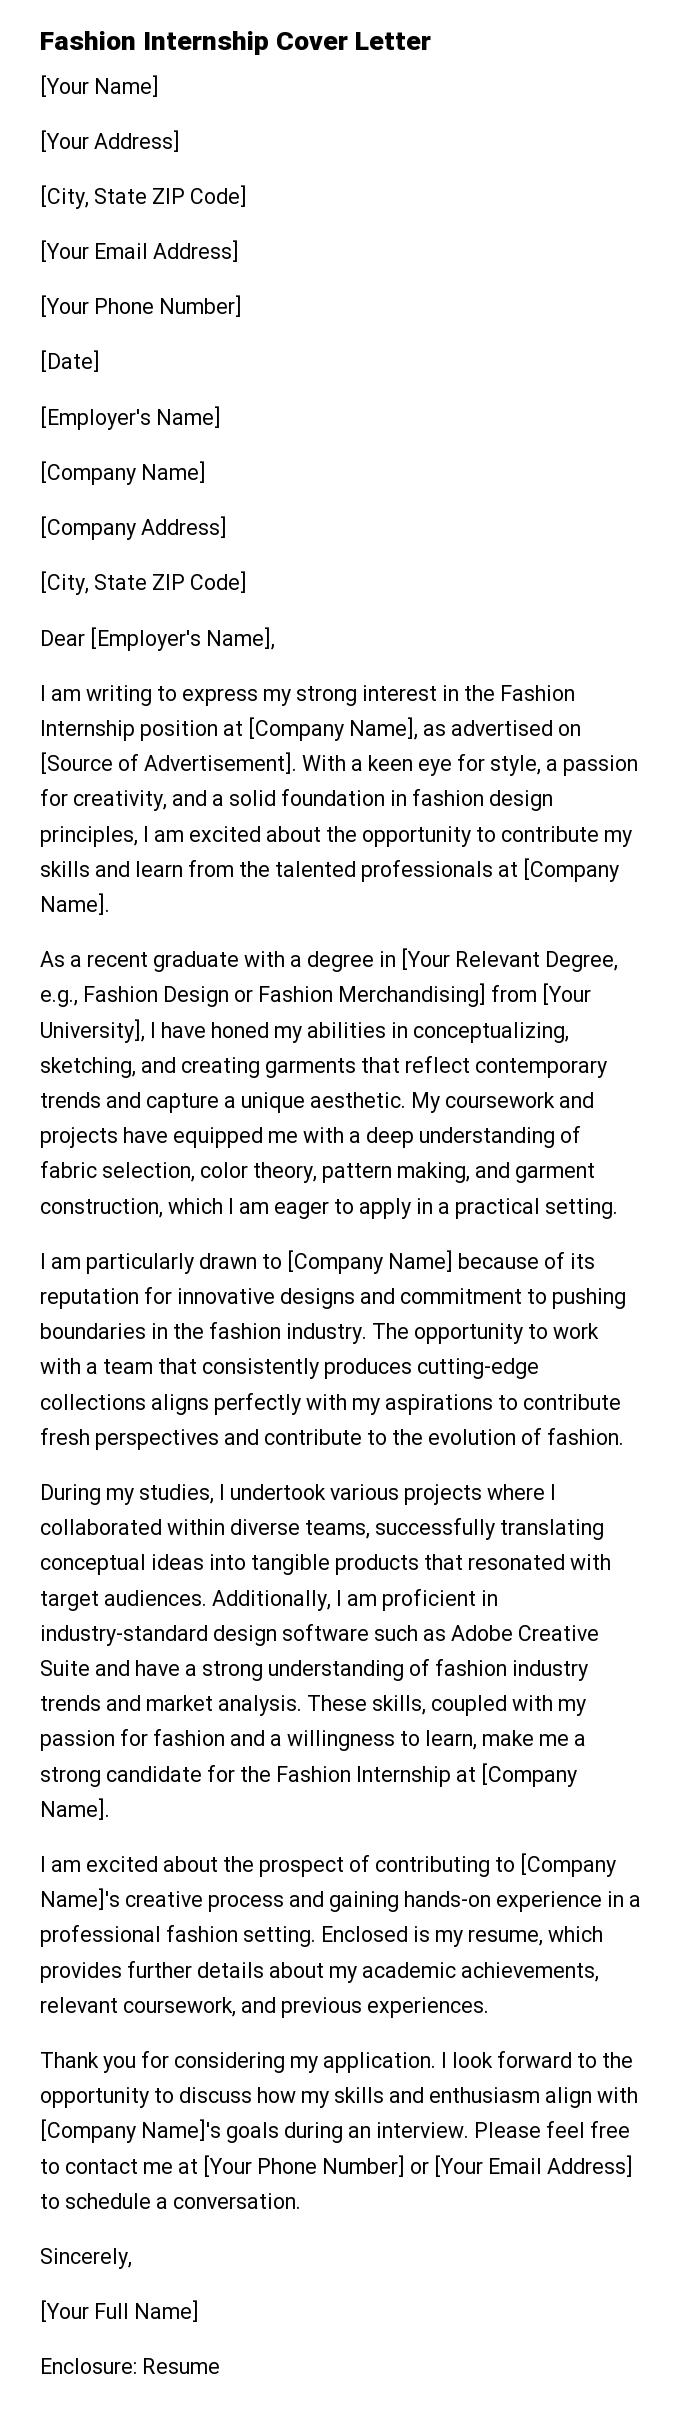 Fashion Internship Cover Letter